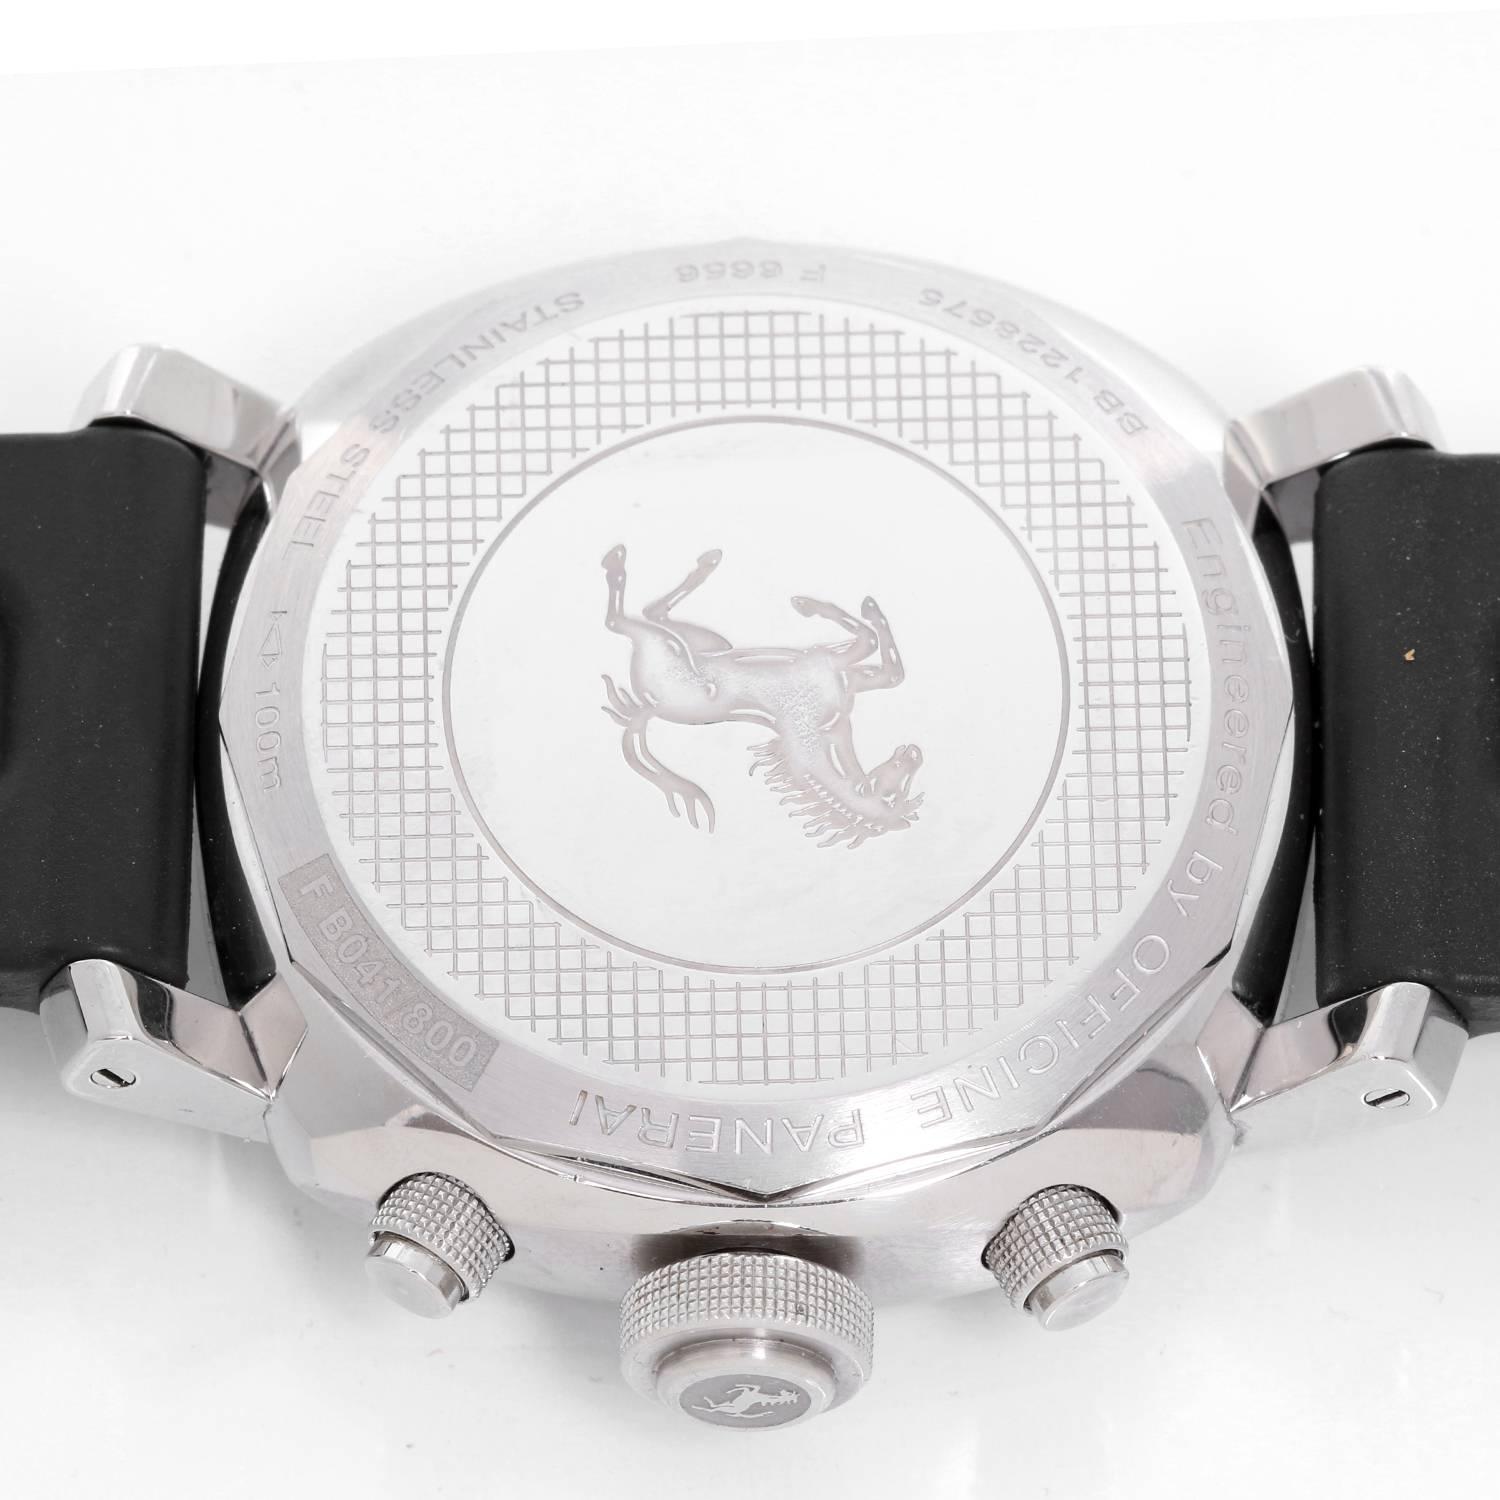 Men's Panerai Stainless Steel Ferrari Granturismo Chronograph Automatic Wristwatch